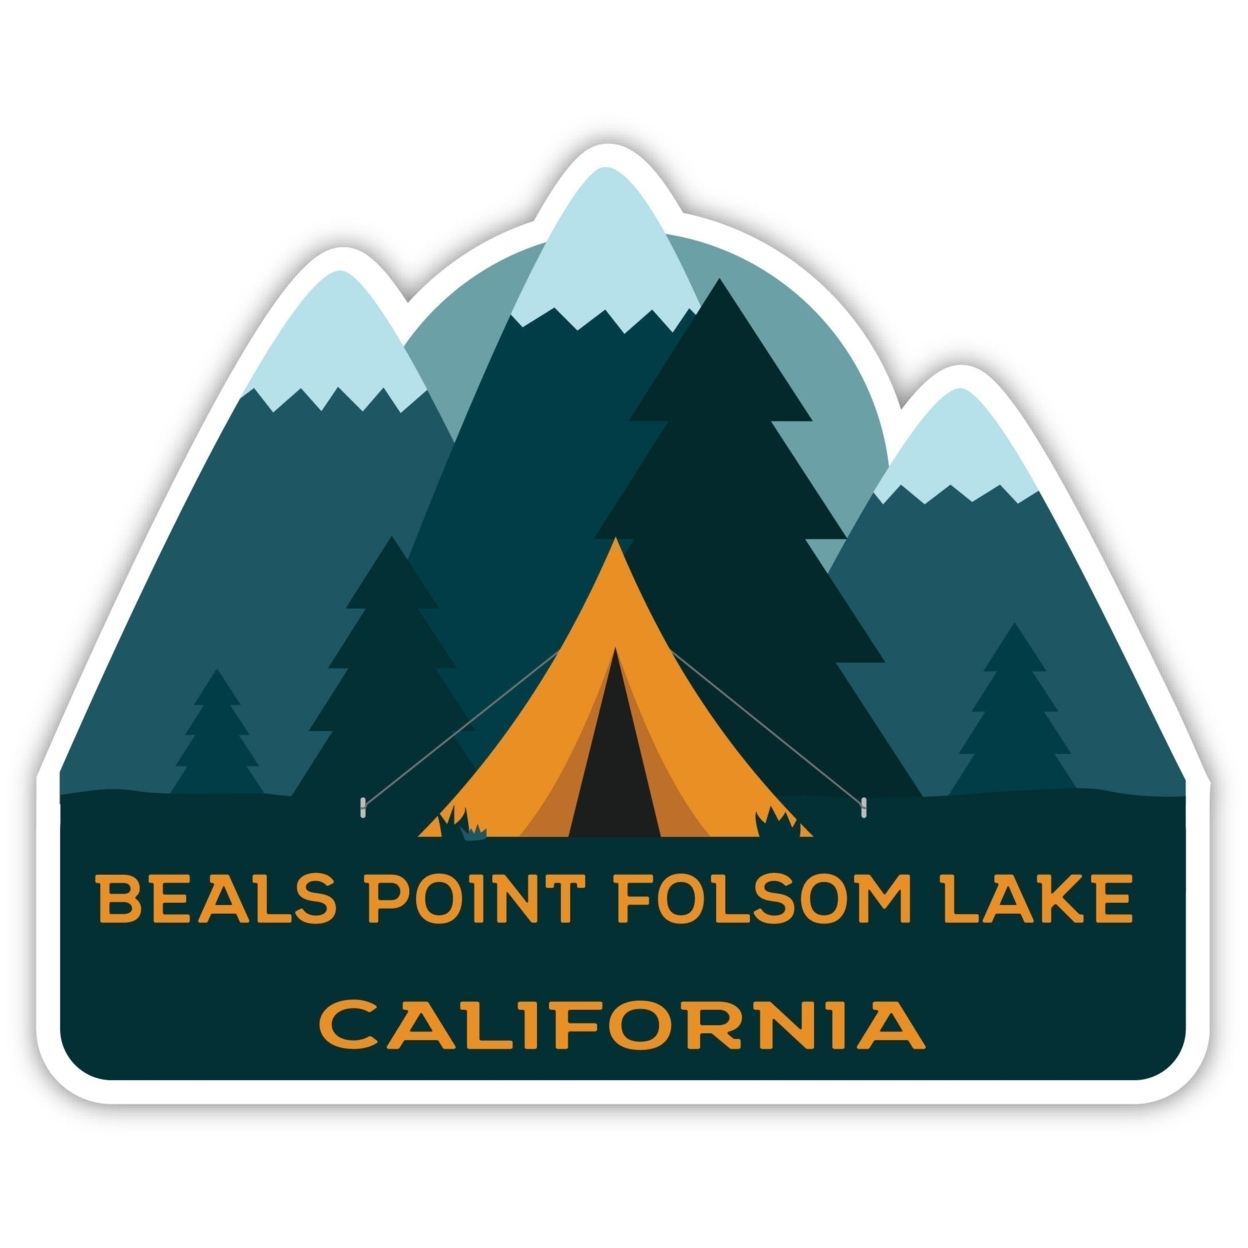 Beals Point Folsom Lake California Souvenir Decorative Stickers (Choose Theme And Size) - Single Unit, 8-Inch, Tent